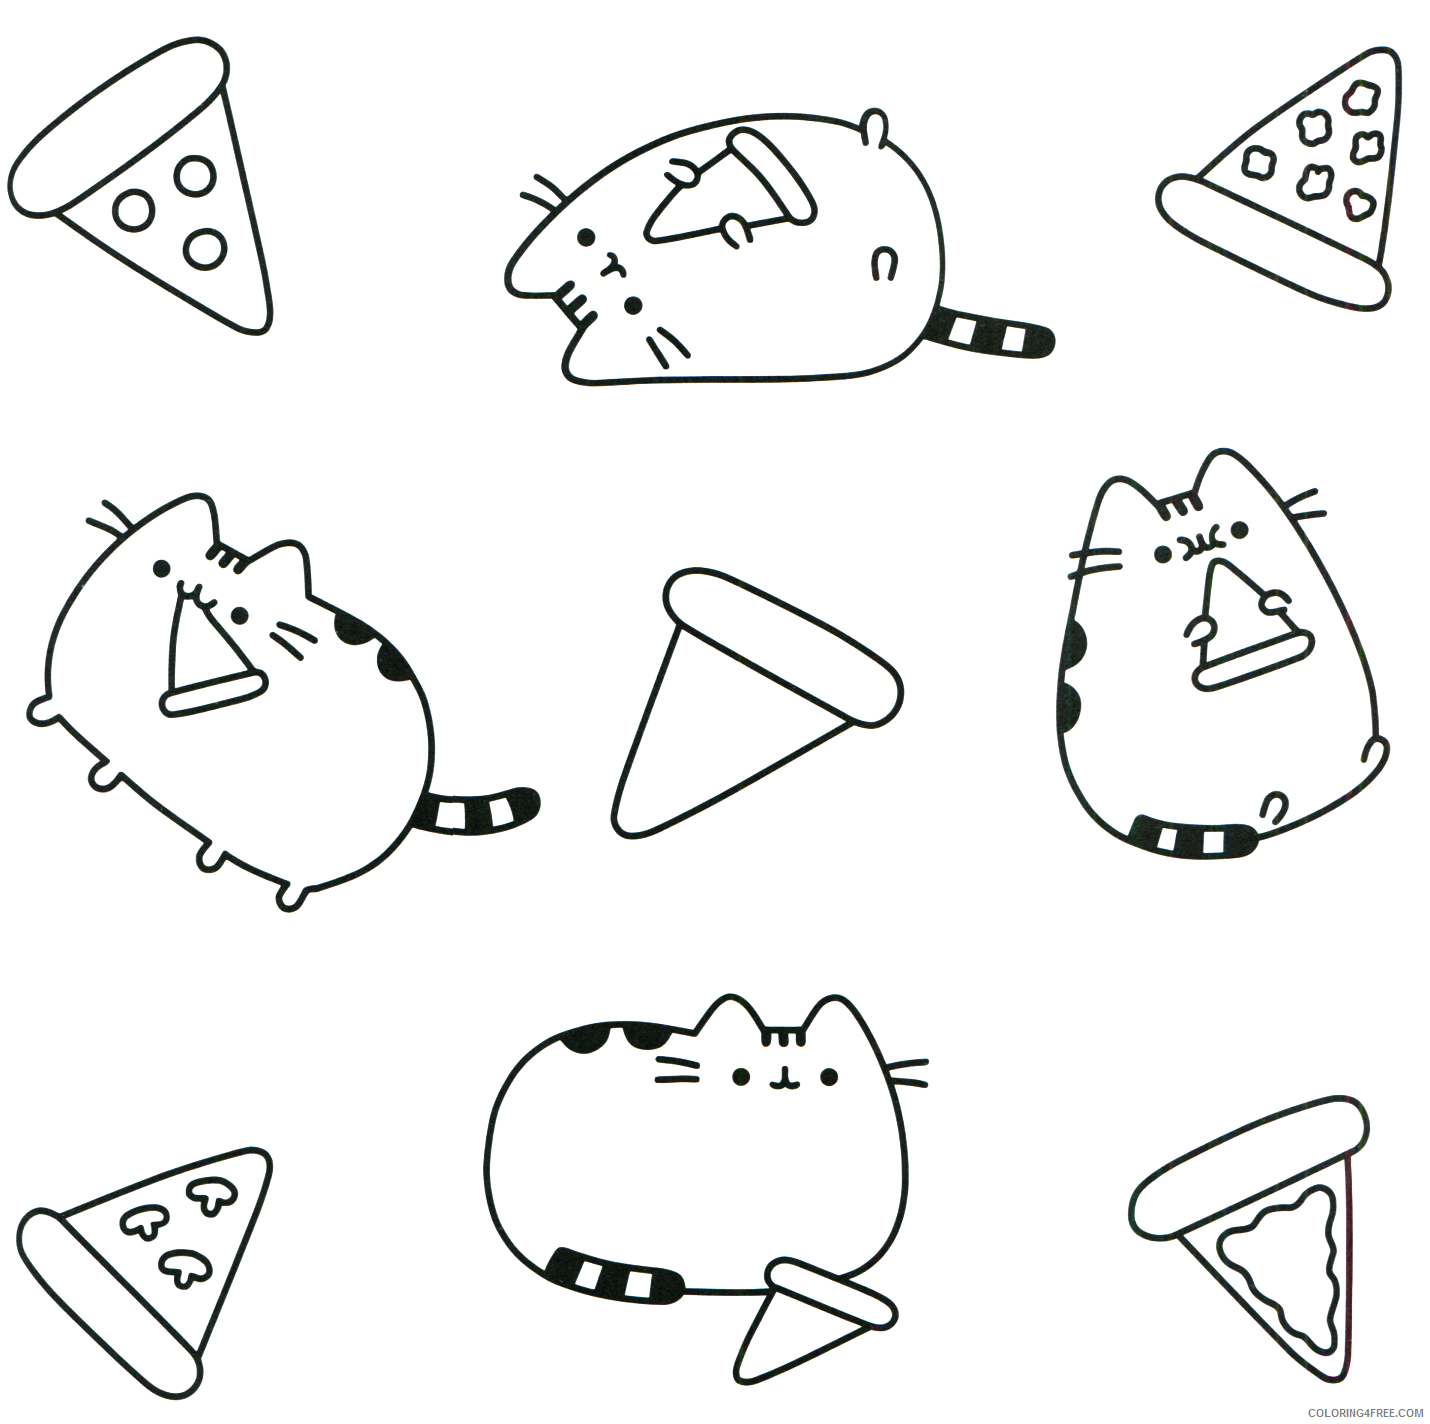 Pusheen Coloring Pages Cartoons Pizza Cat Pusheen Printable 2020 5187 Coloring4free